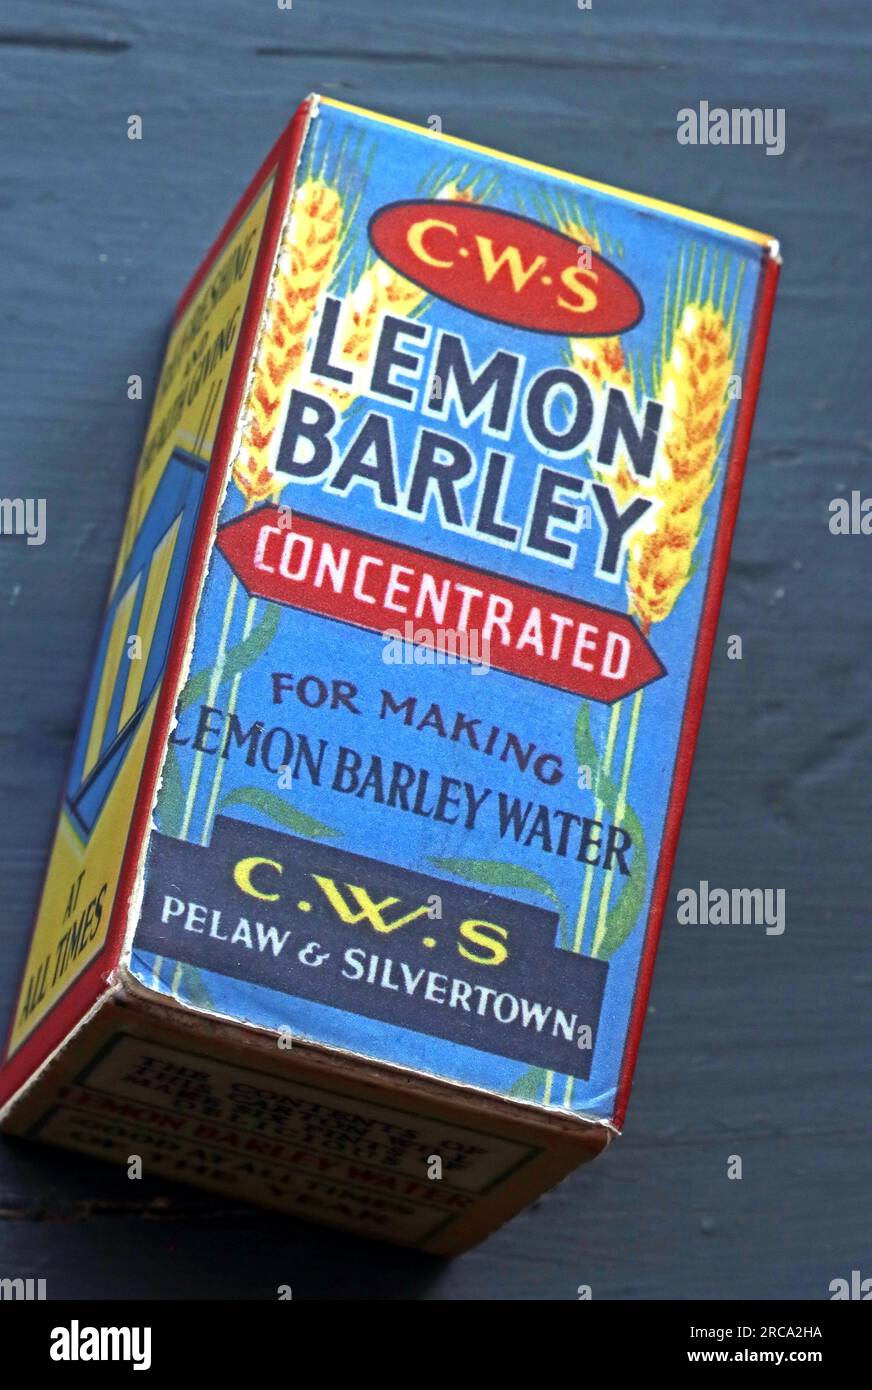 Lemon Barley CWS concentrated powder for making Lemon Barley Water, Pelaw & Silvertown, 1950s Stock Photo